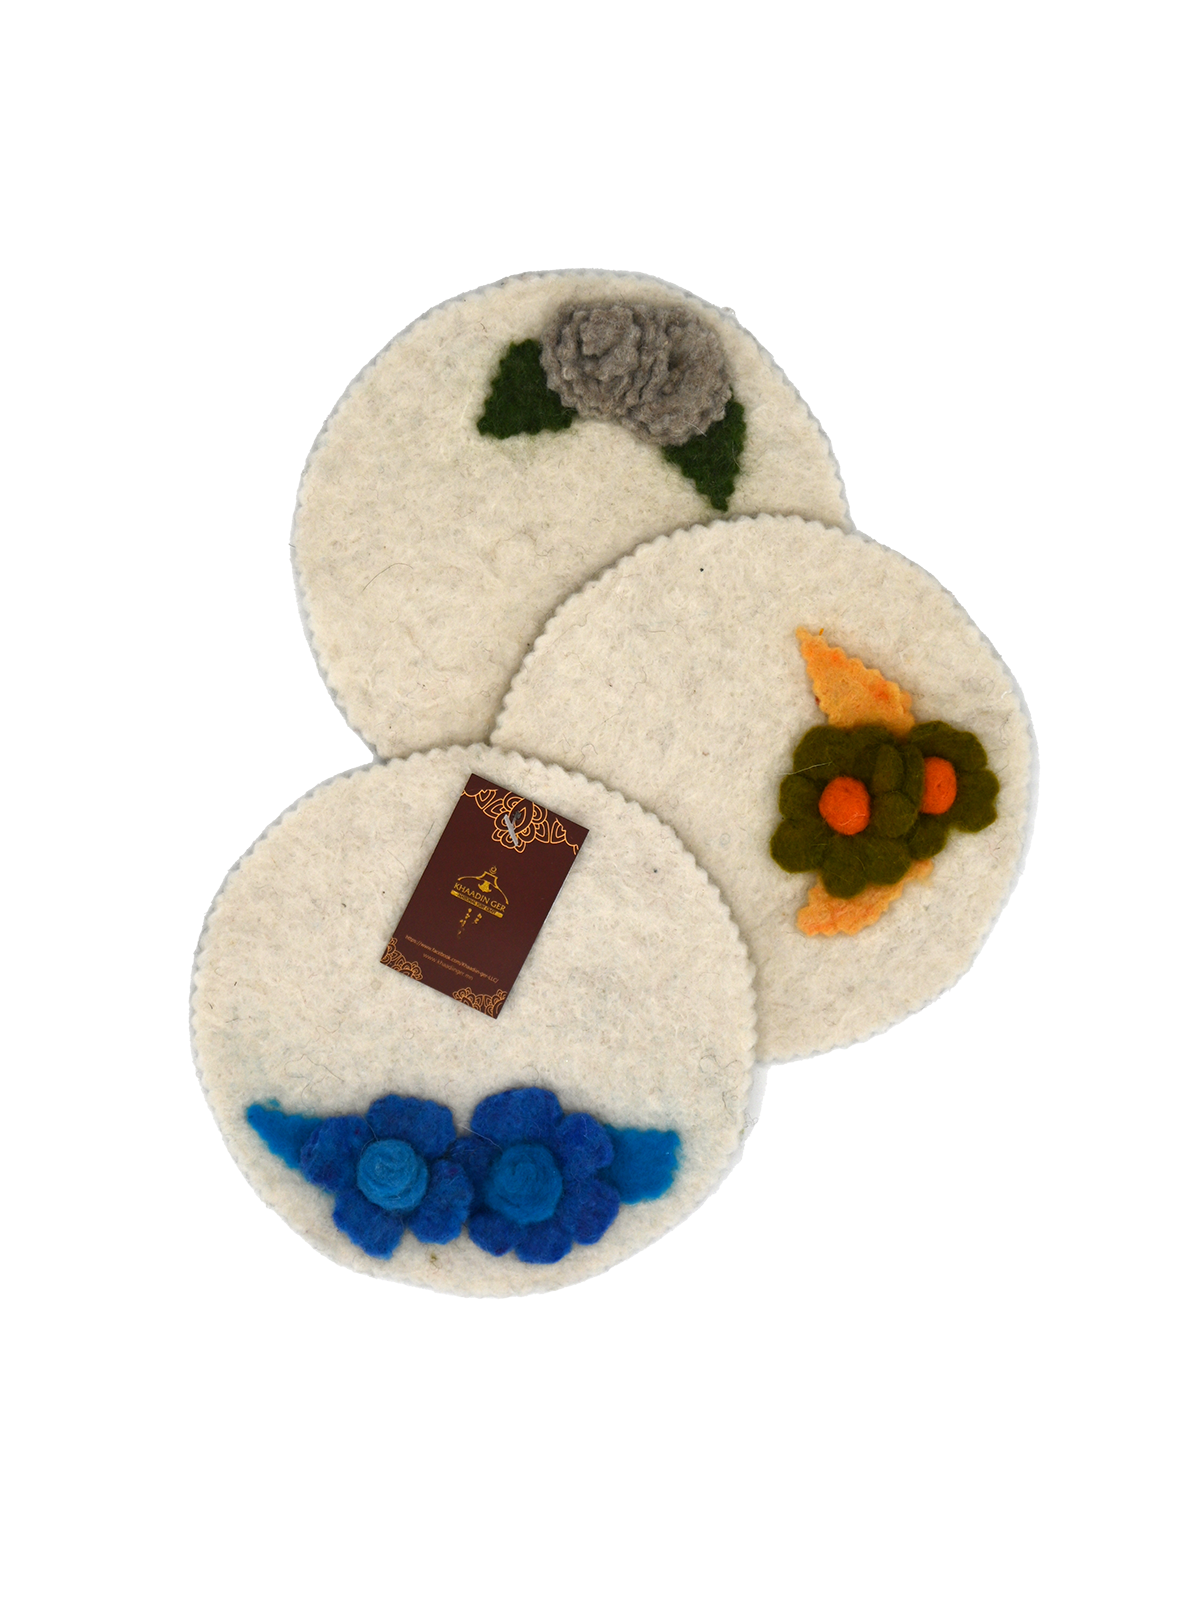 Handmade Wool Coasters with Flowers (3pcs)